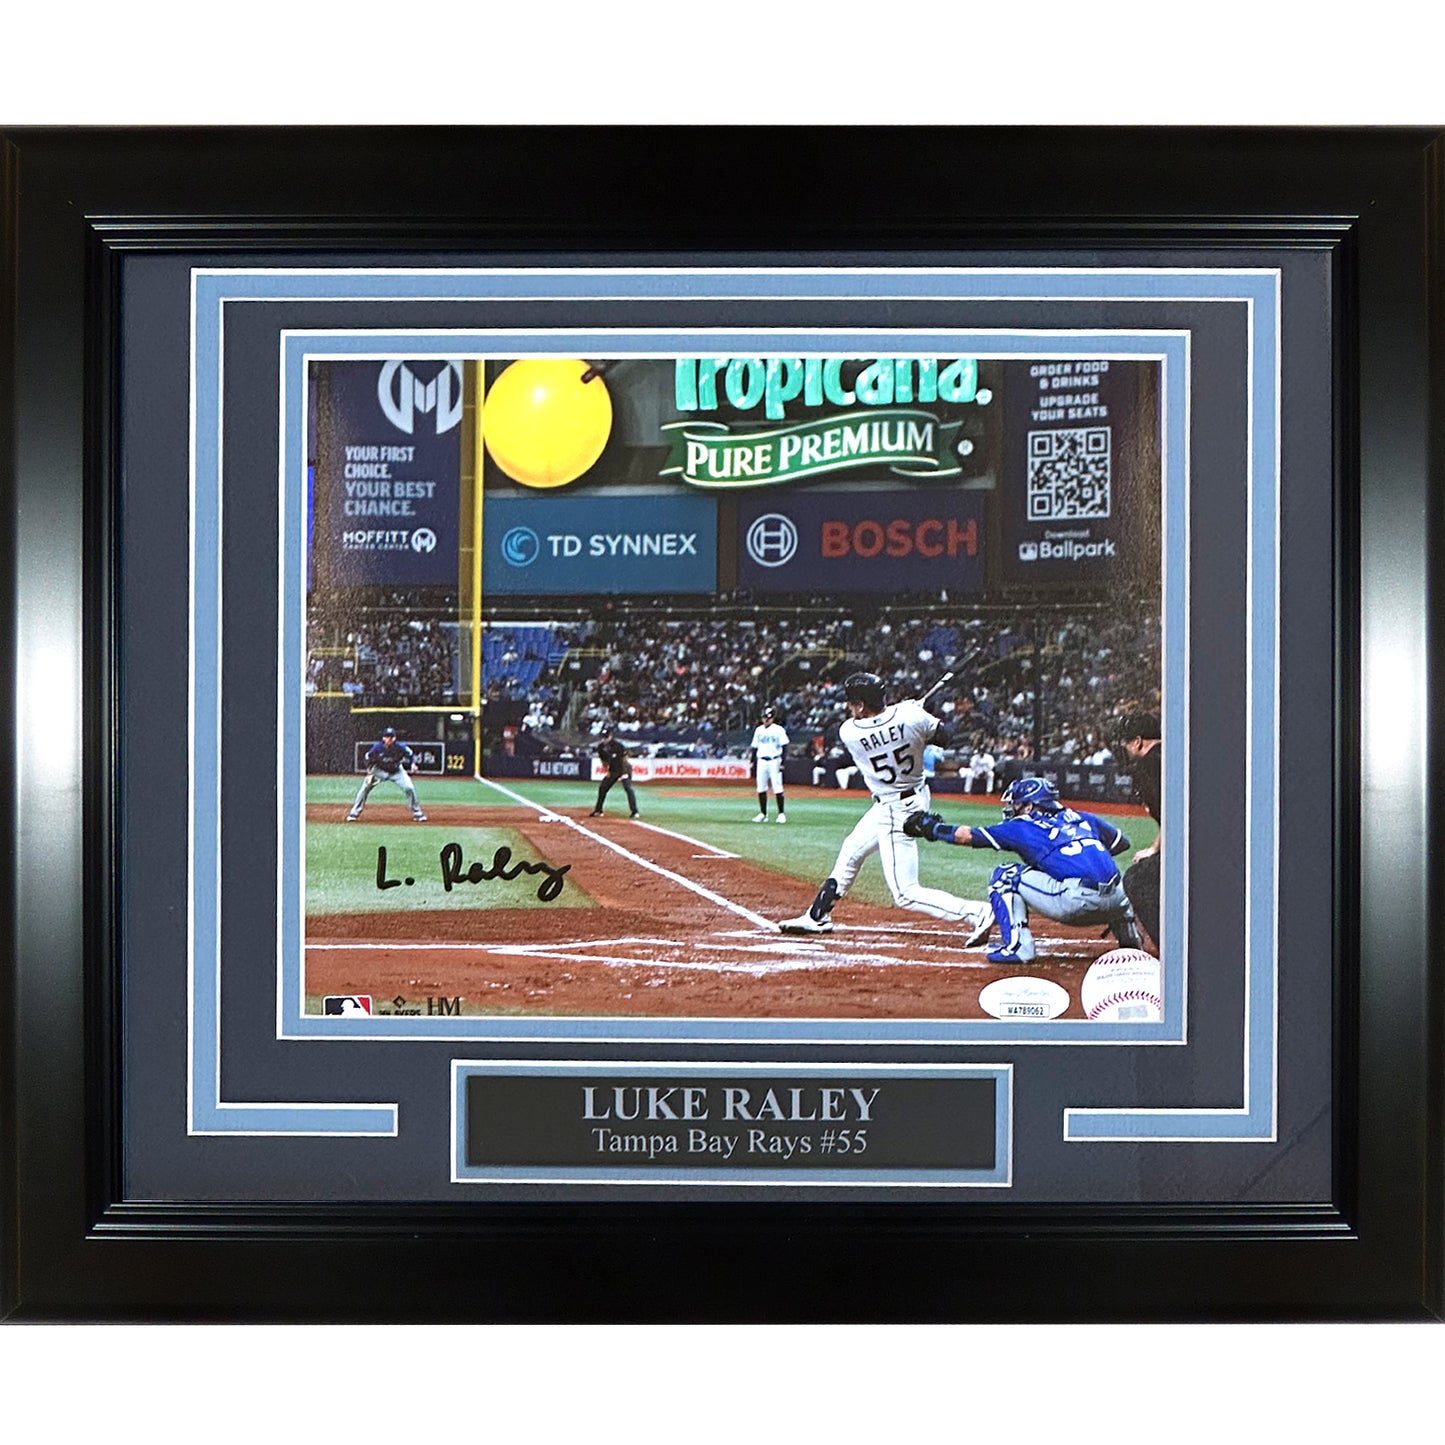 Luke Raley Autographed Tampa Bay Rays (Batting Horizontal) Framed 8x10 Photo - JSA